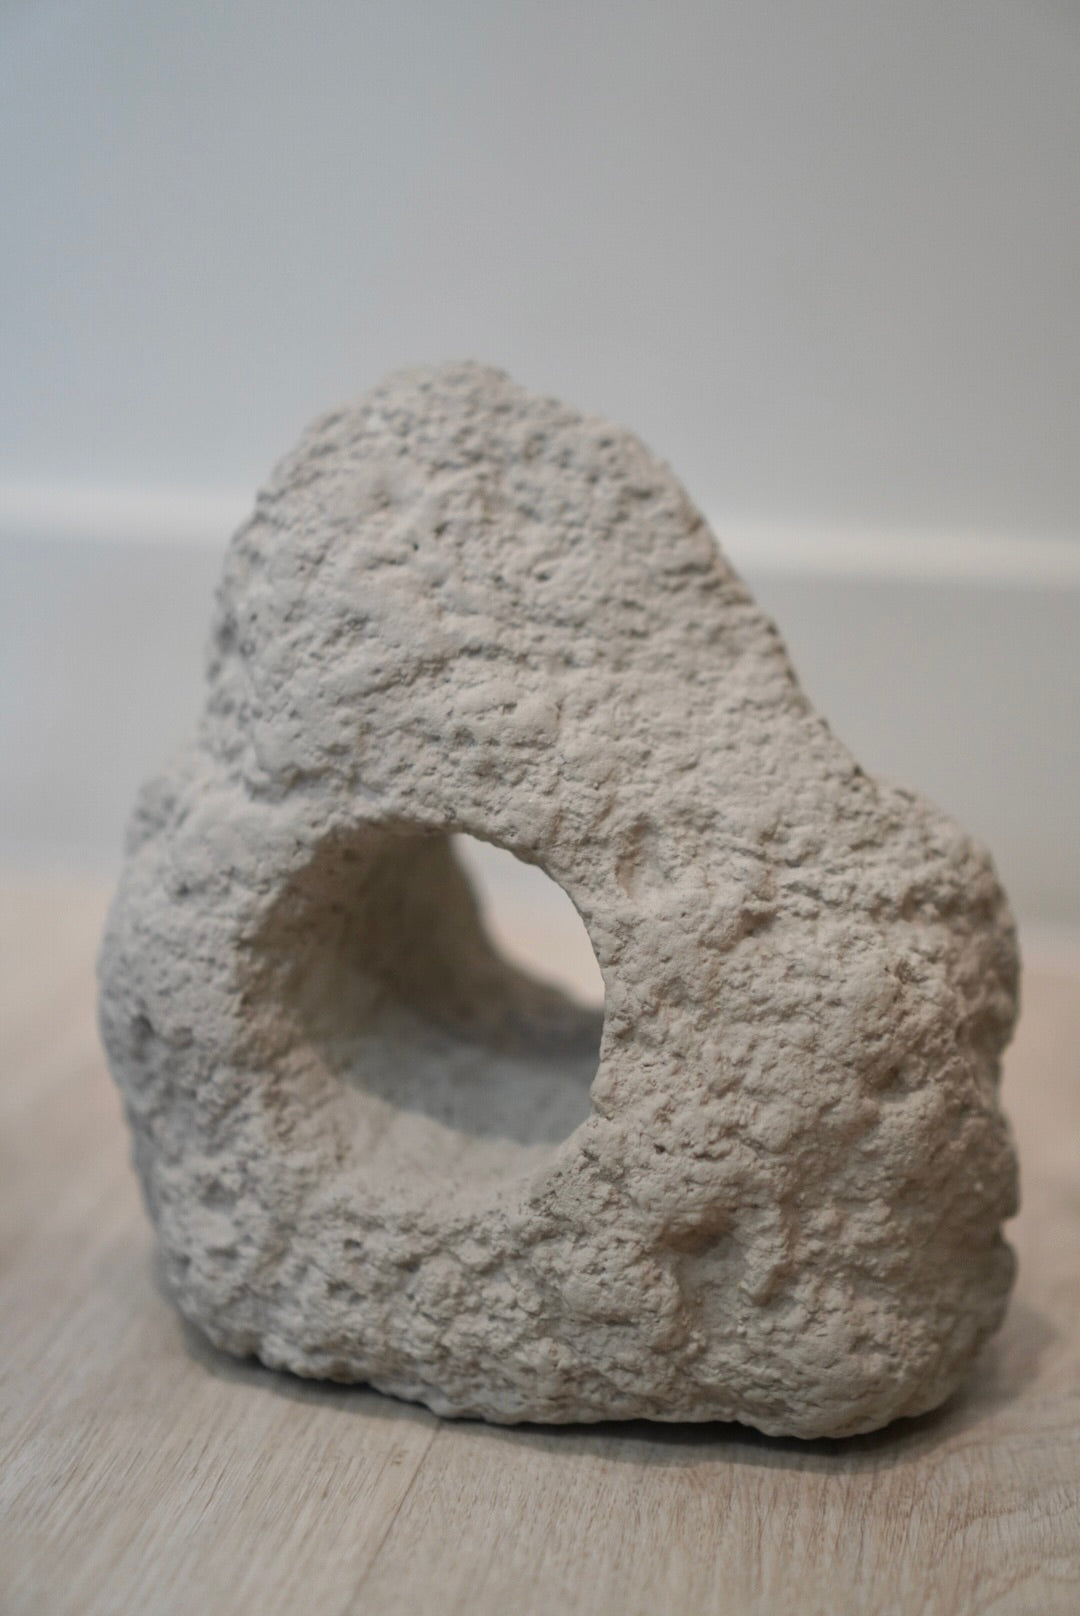 Decorative Stone Object (Batis)